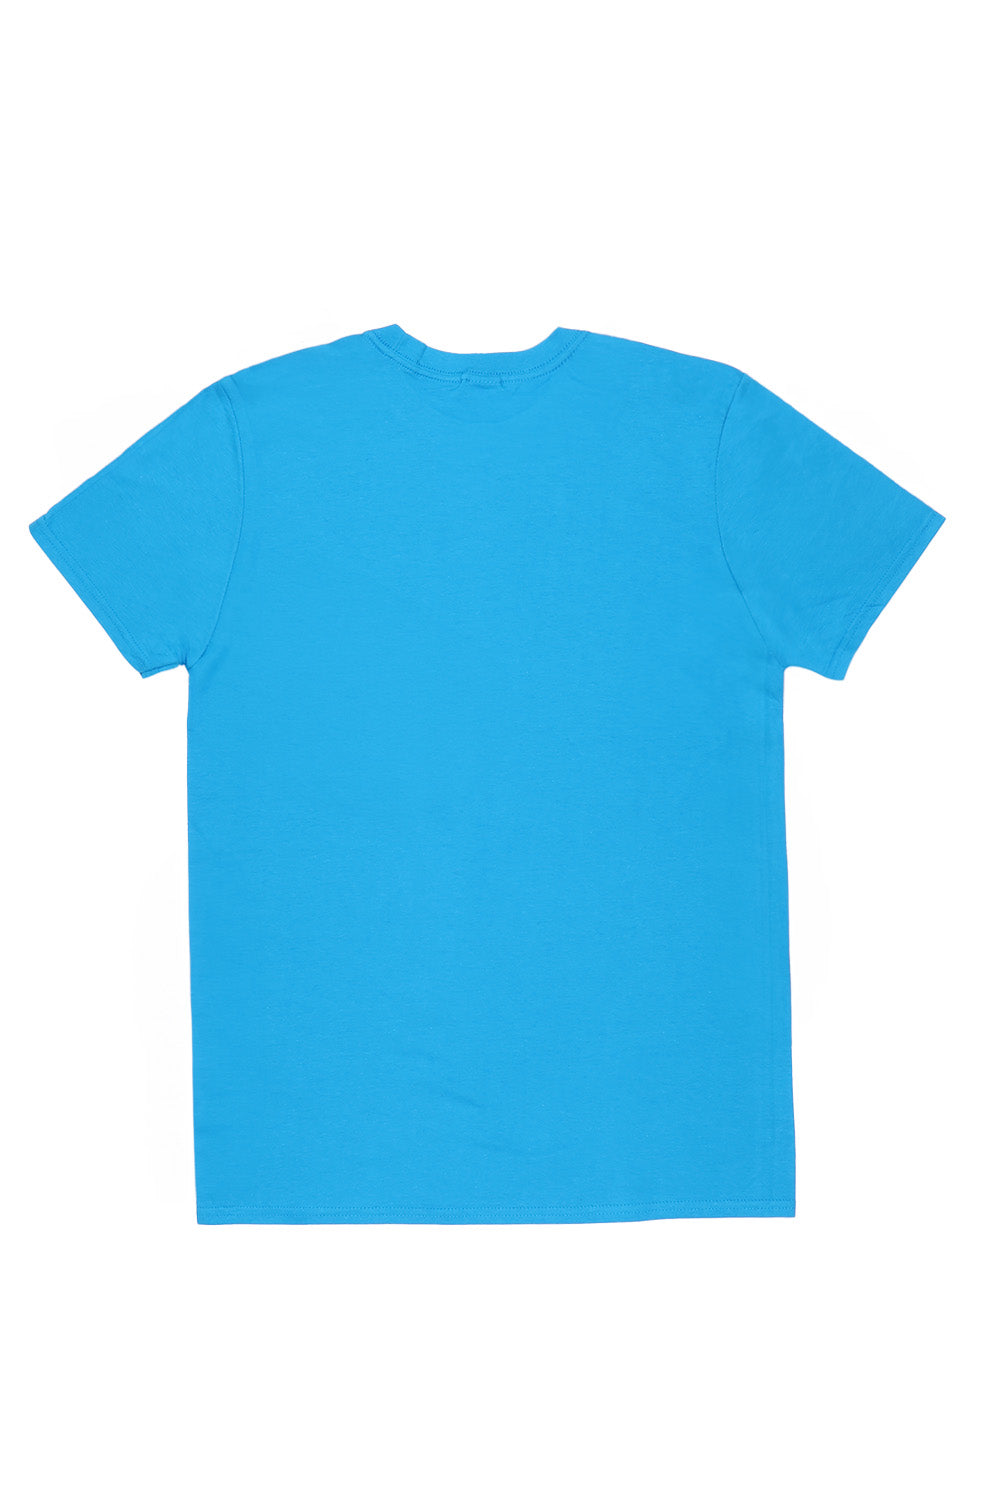 San Francisco T-Shirt in Sapphire Blue (Custom Packs)